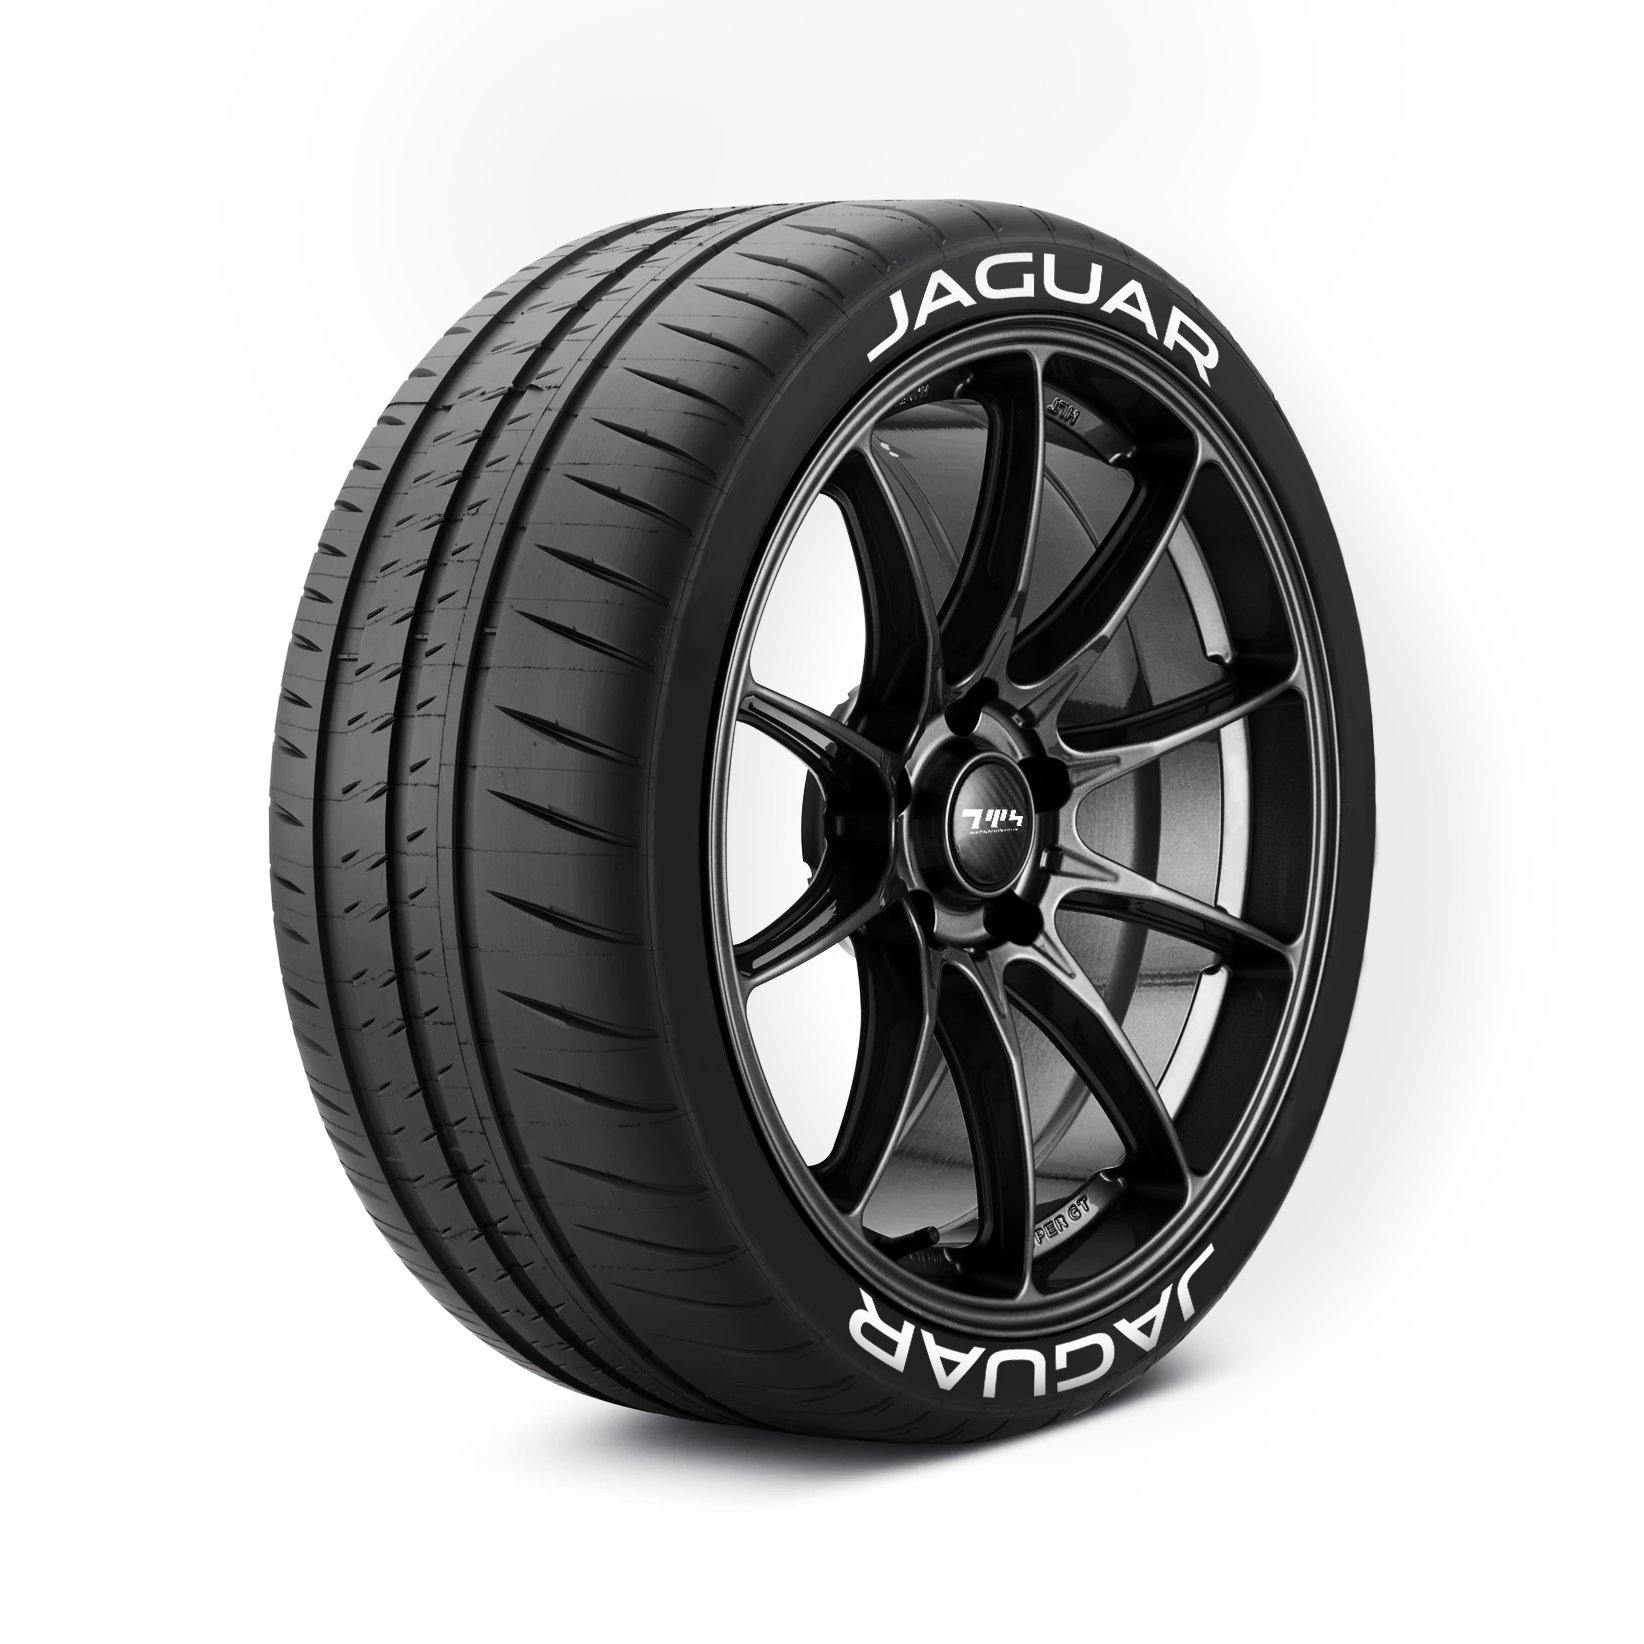 Jaguar Tyre Stickers - Tyre Wall Stickers